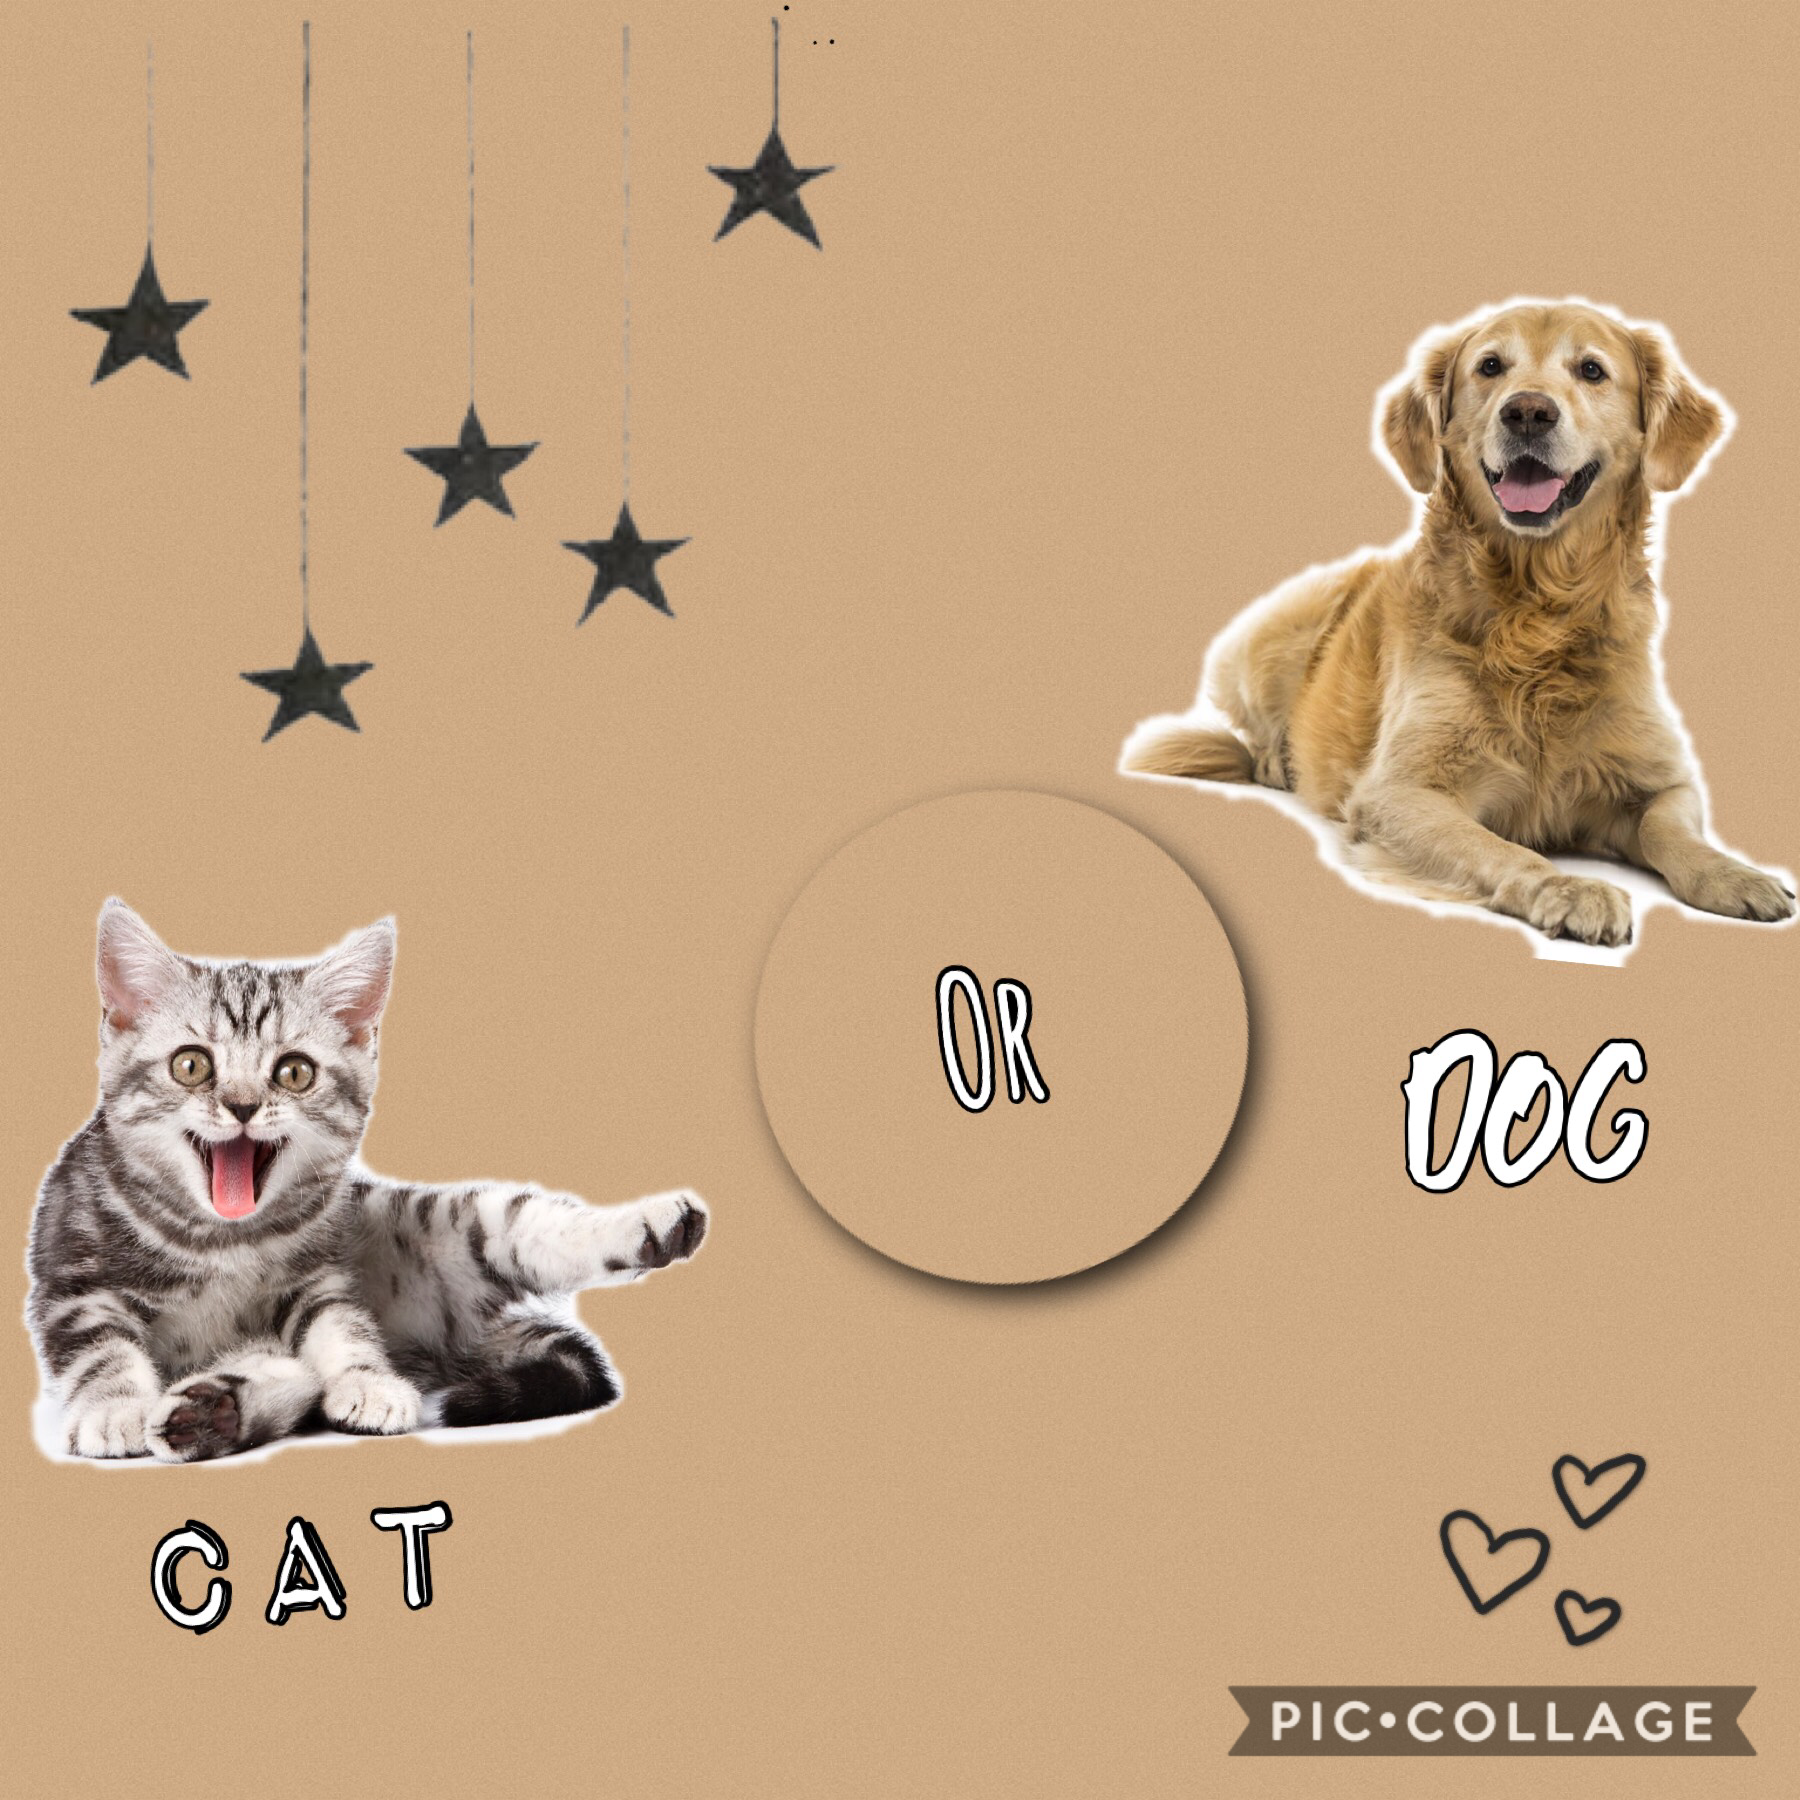 🐱 Cat Or 🐶 Dog?